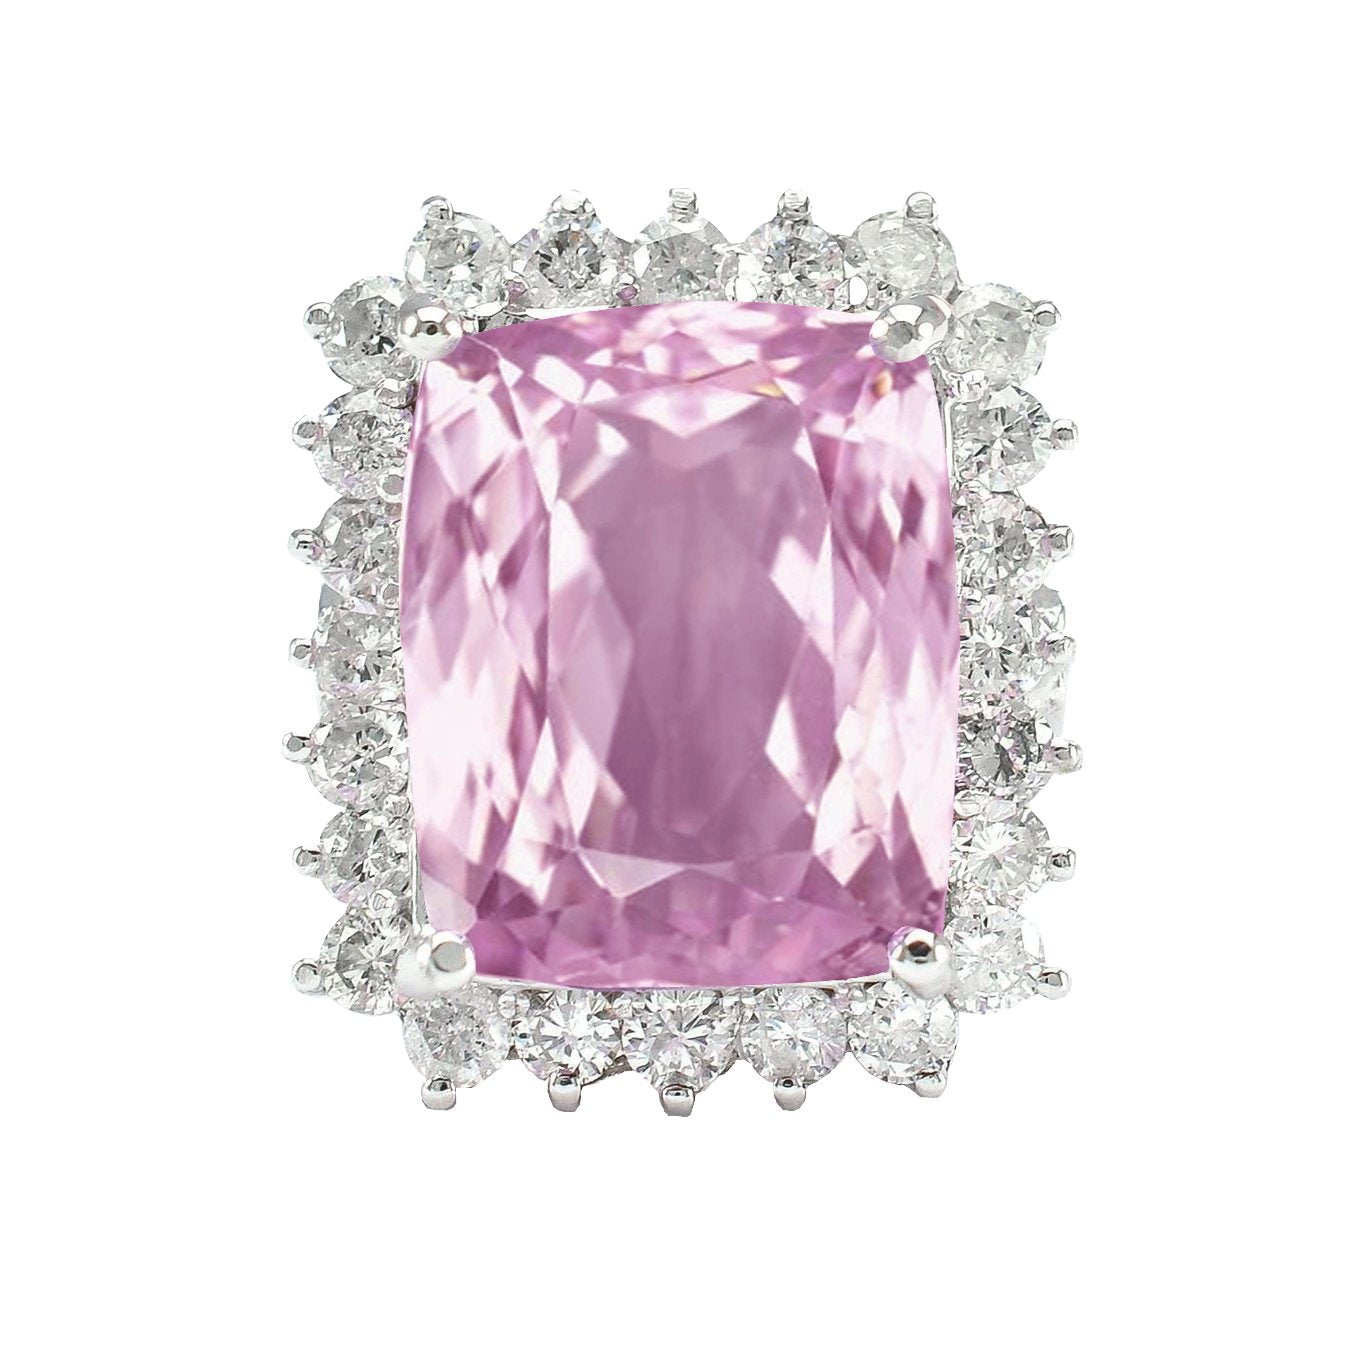 21 Carats Pink Kunzite With Diamond Halo Ring White Gold 14K - Gemstone Ring-harrychadent.ca